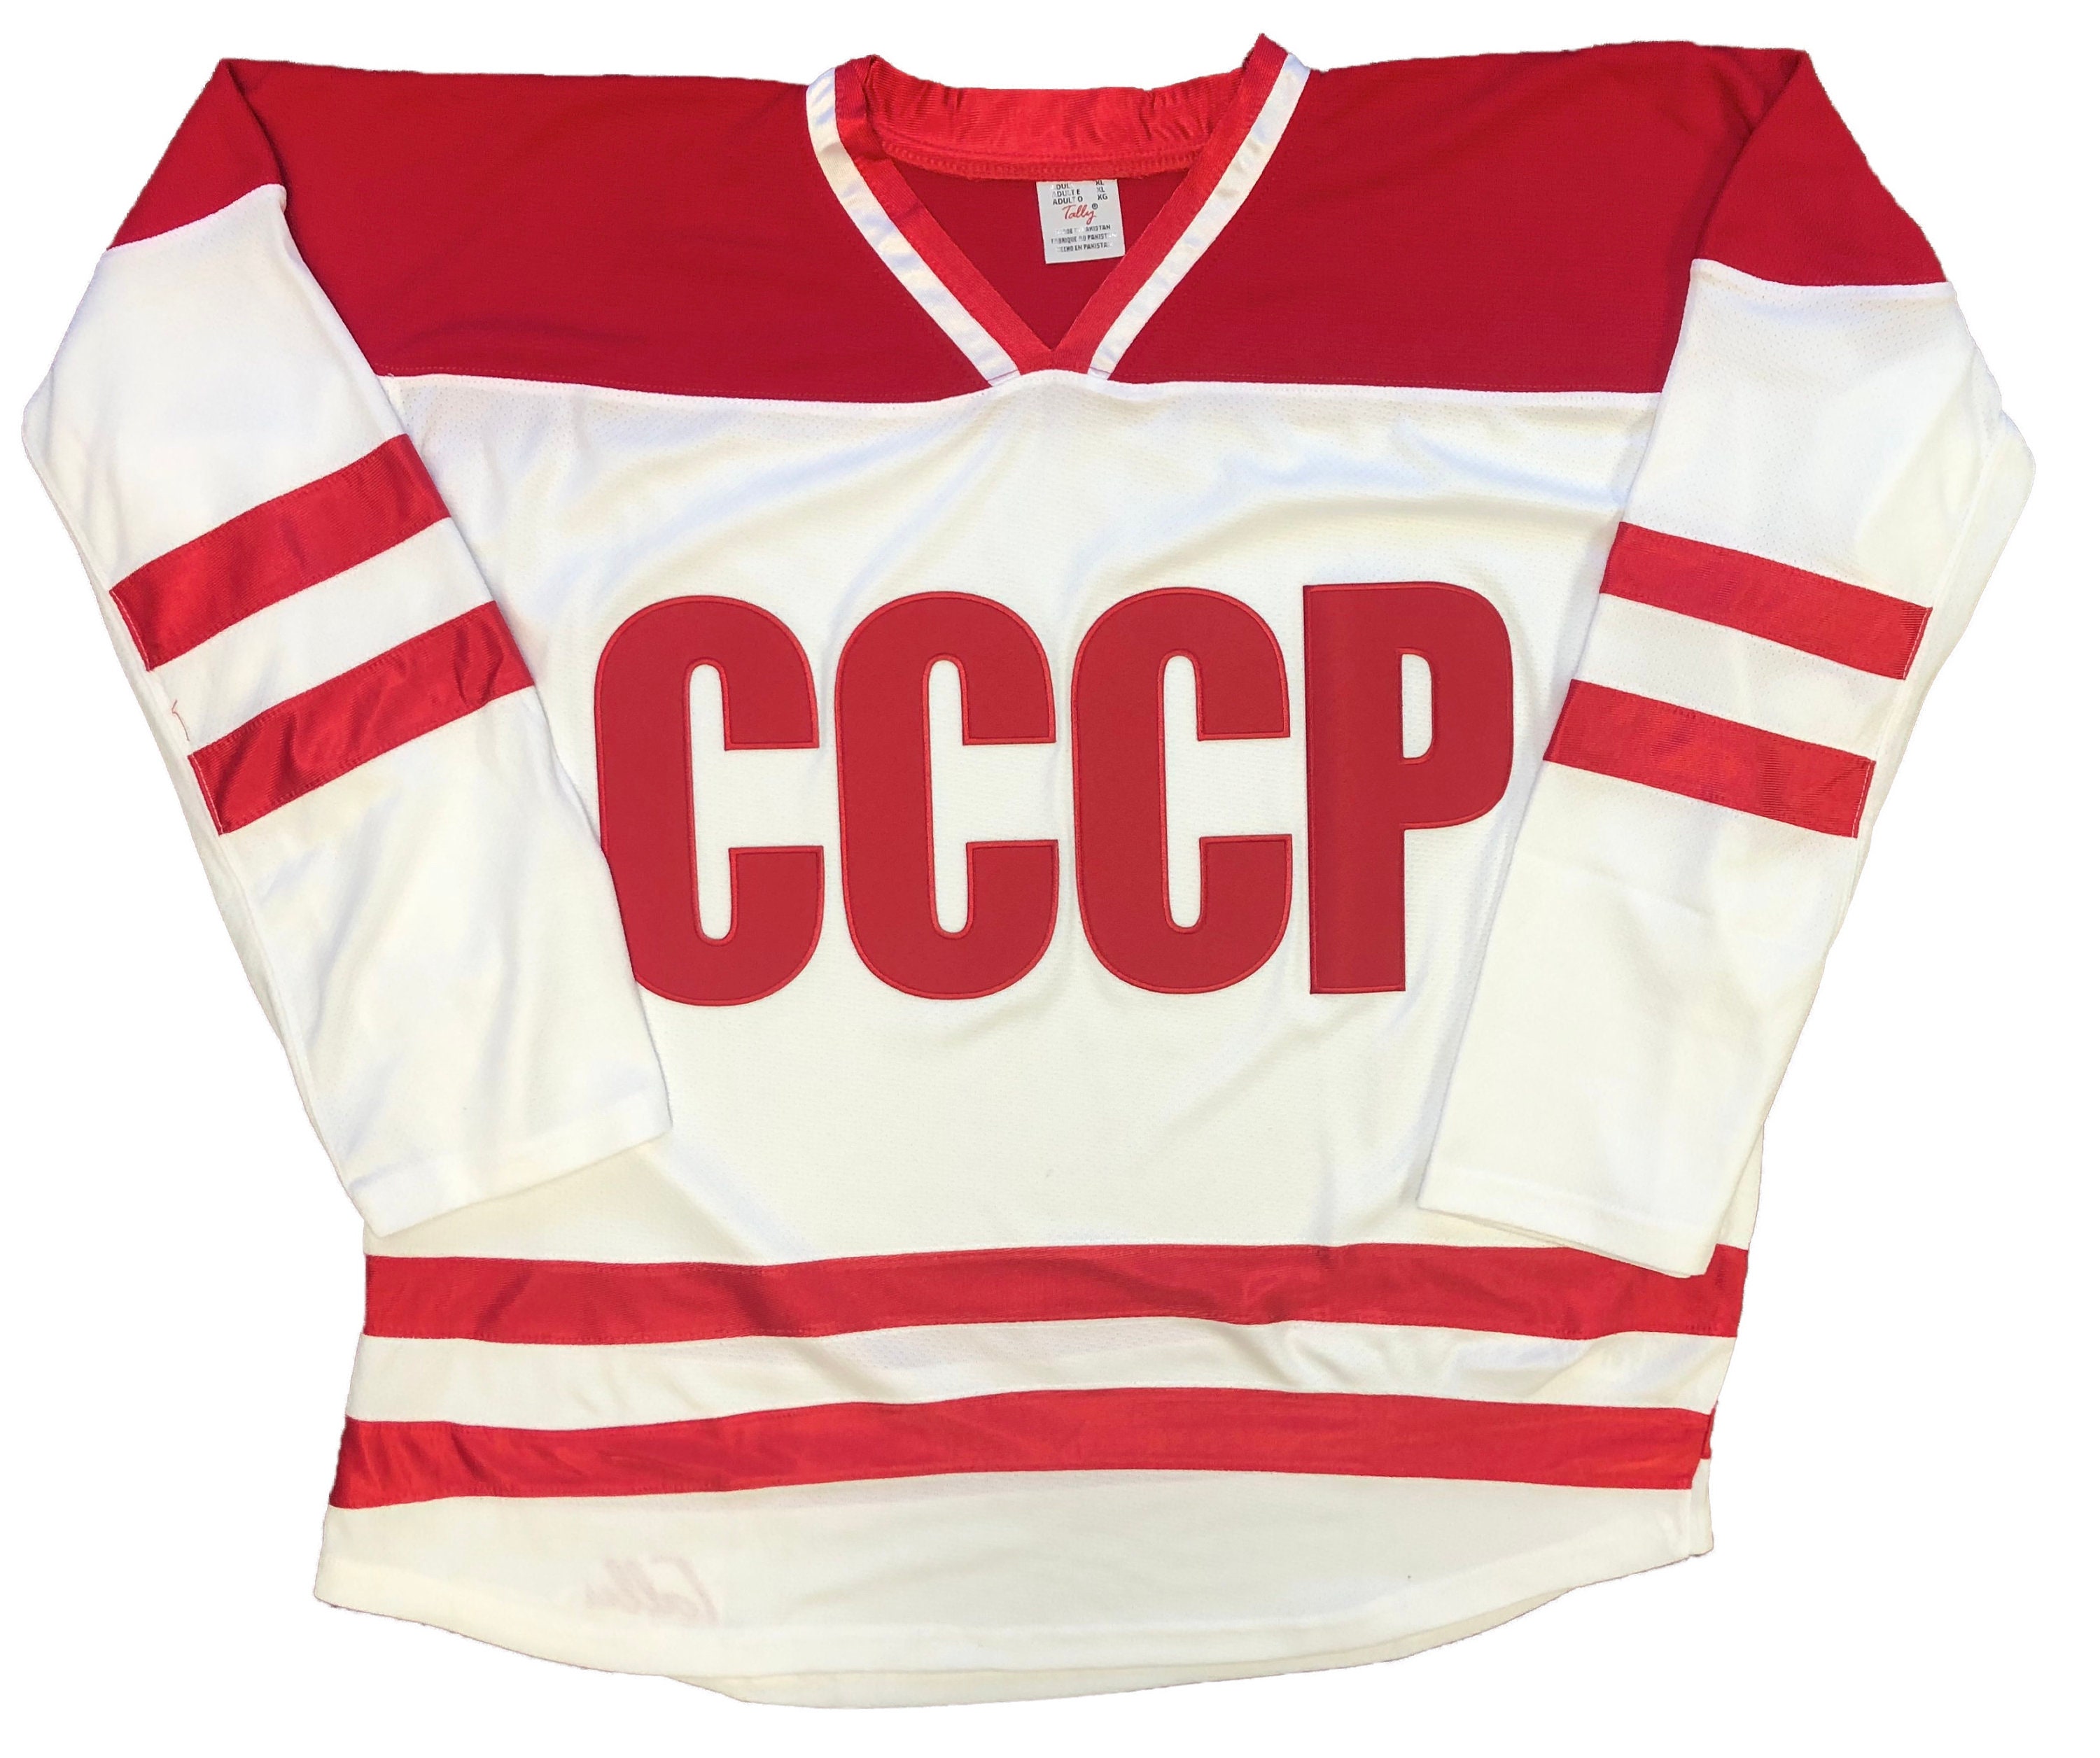 Cccp Hockey Jersey 